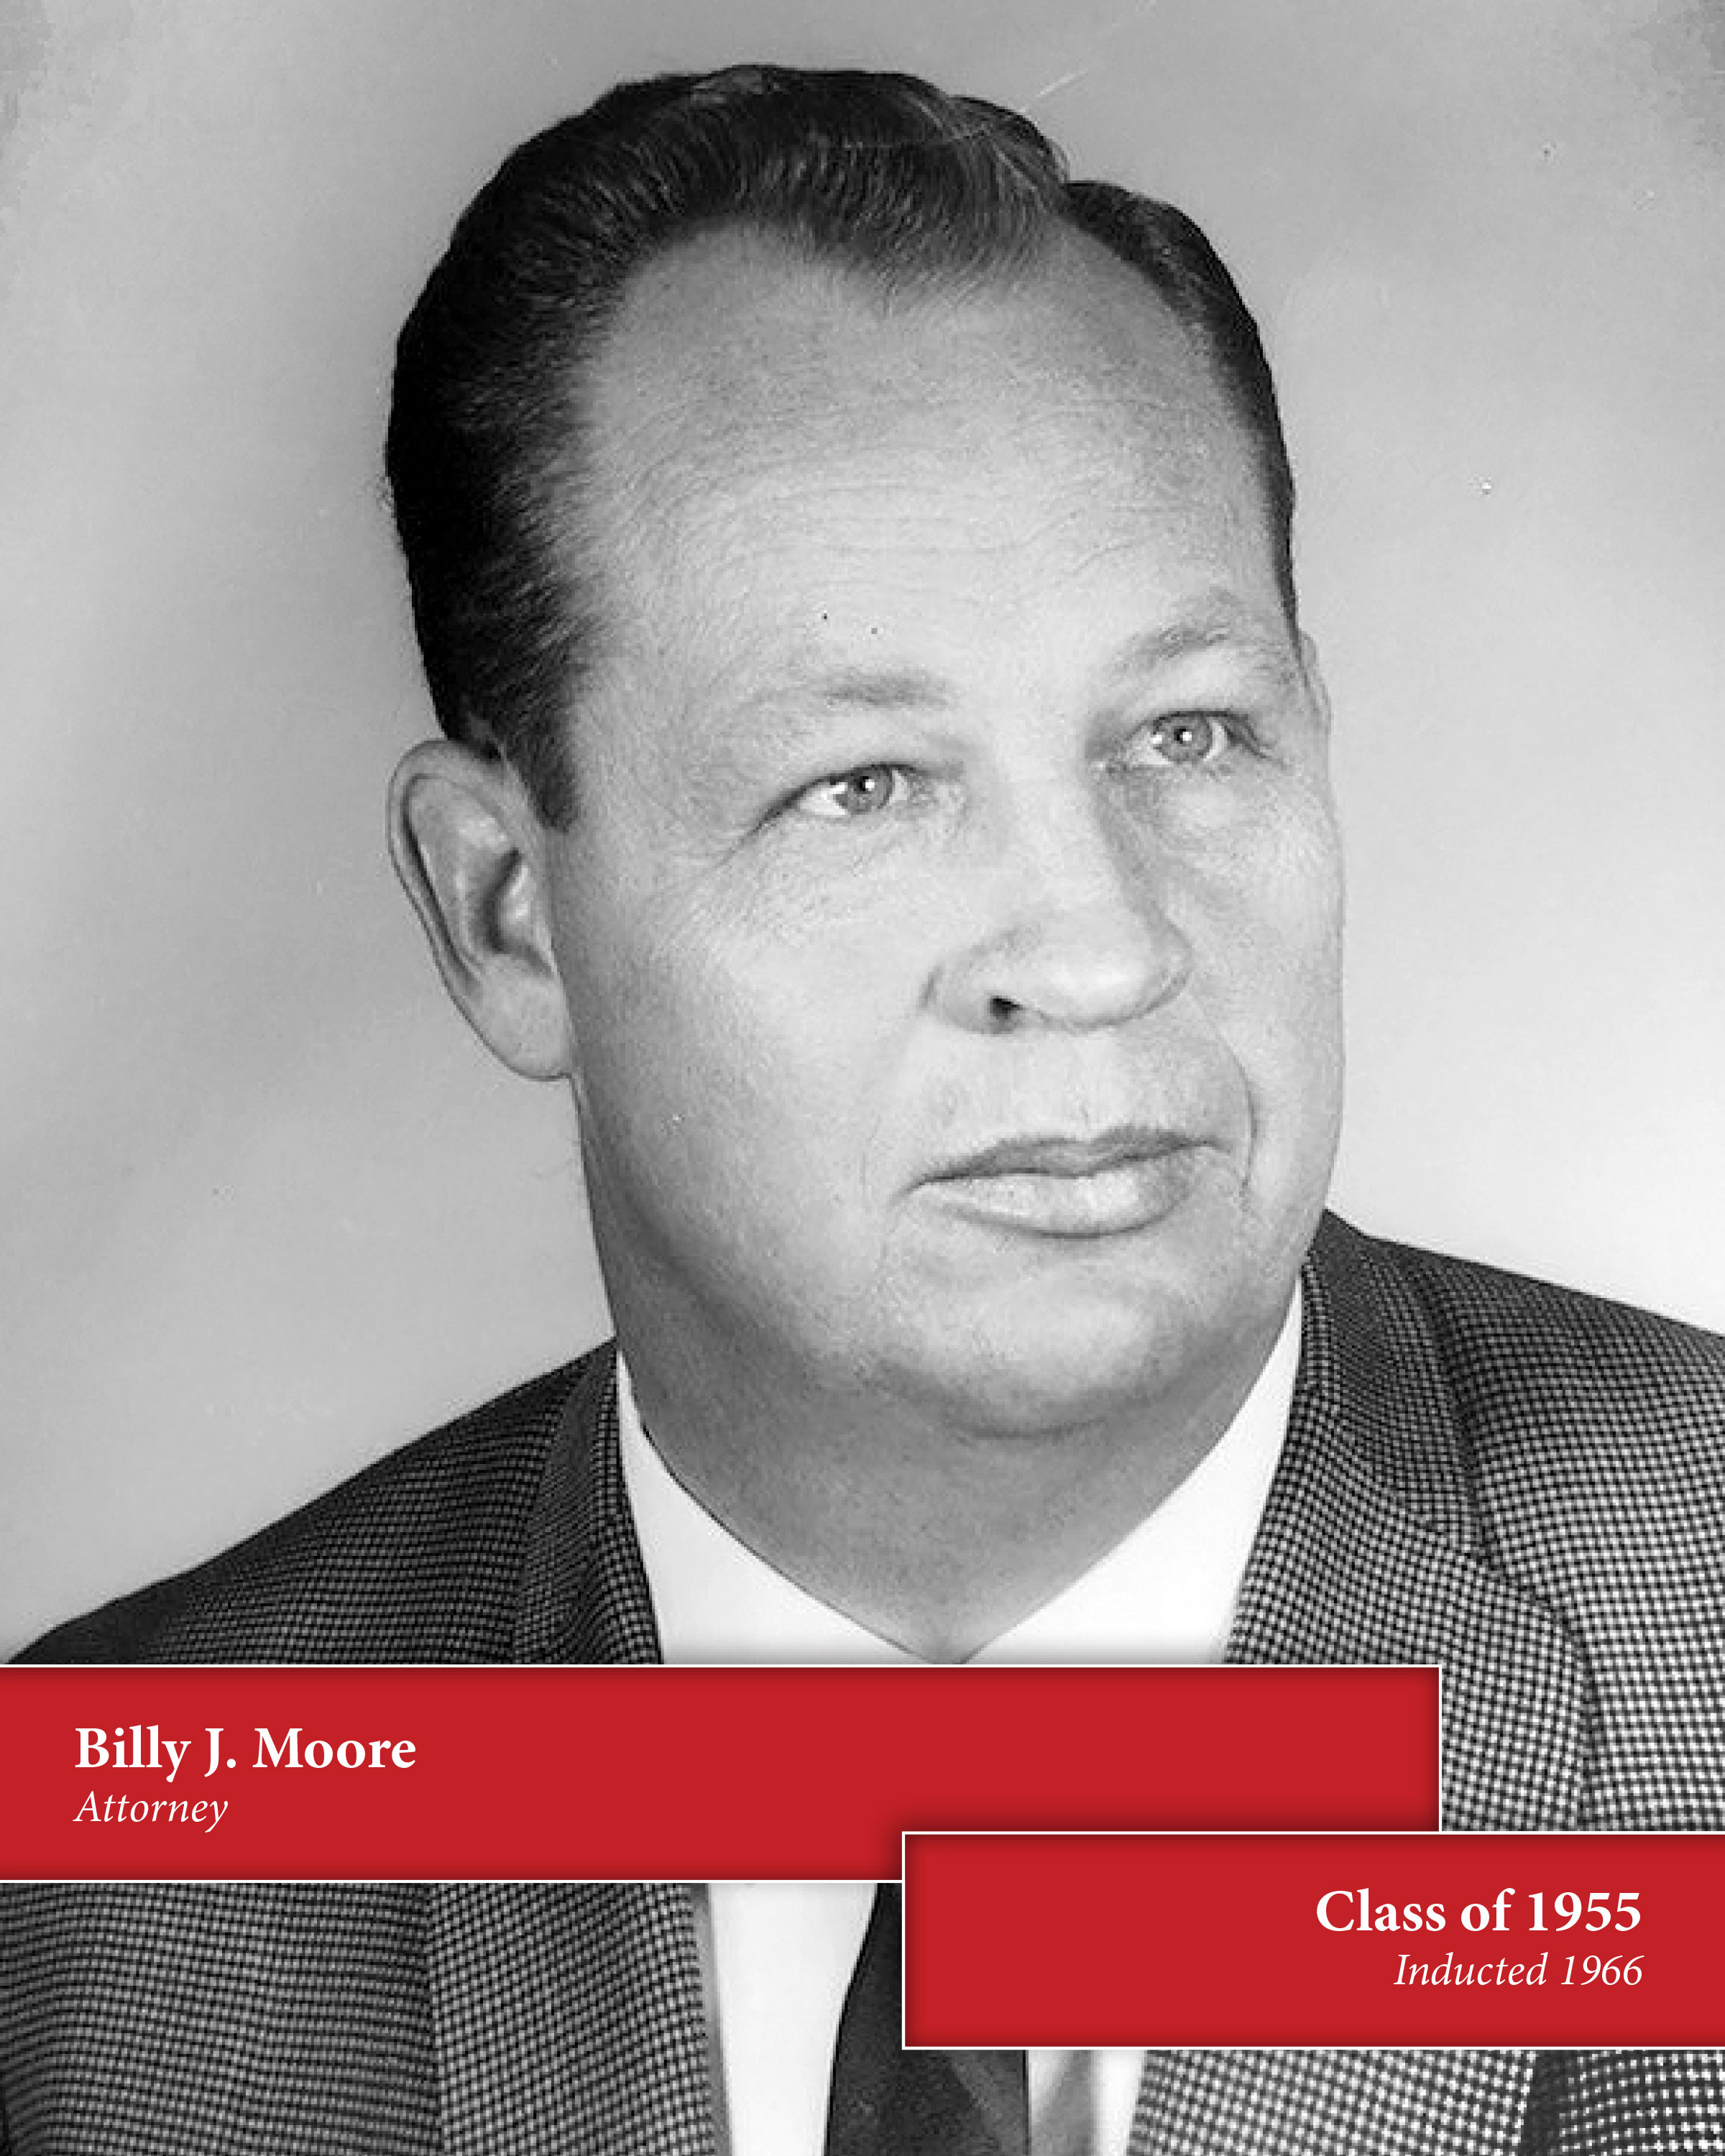 Billy Moore